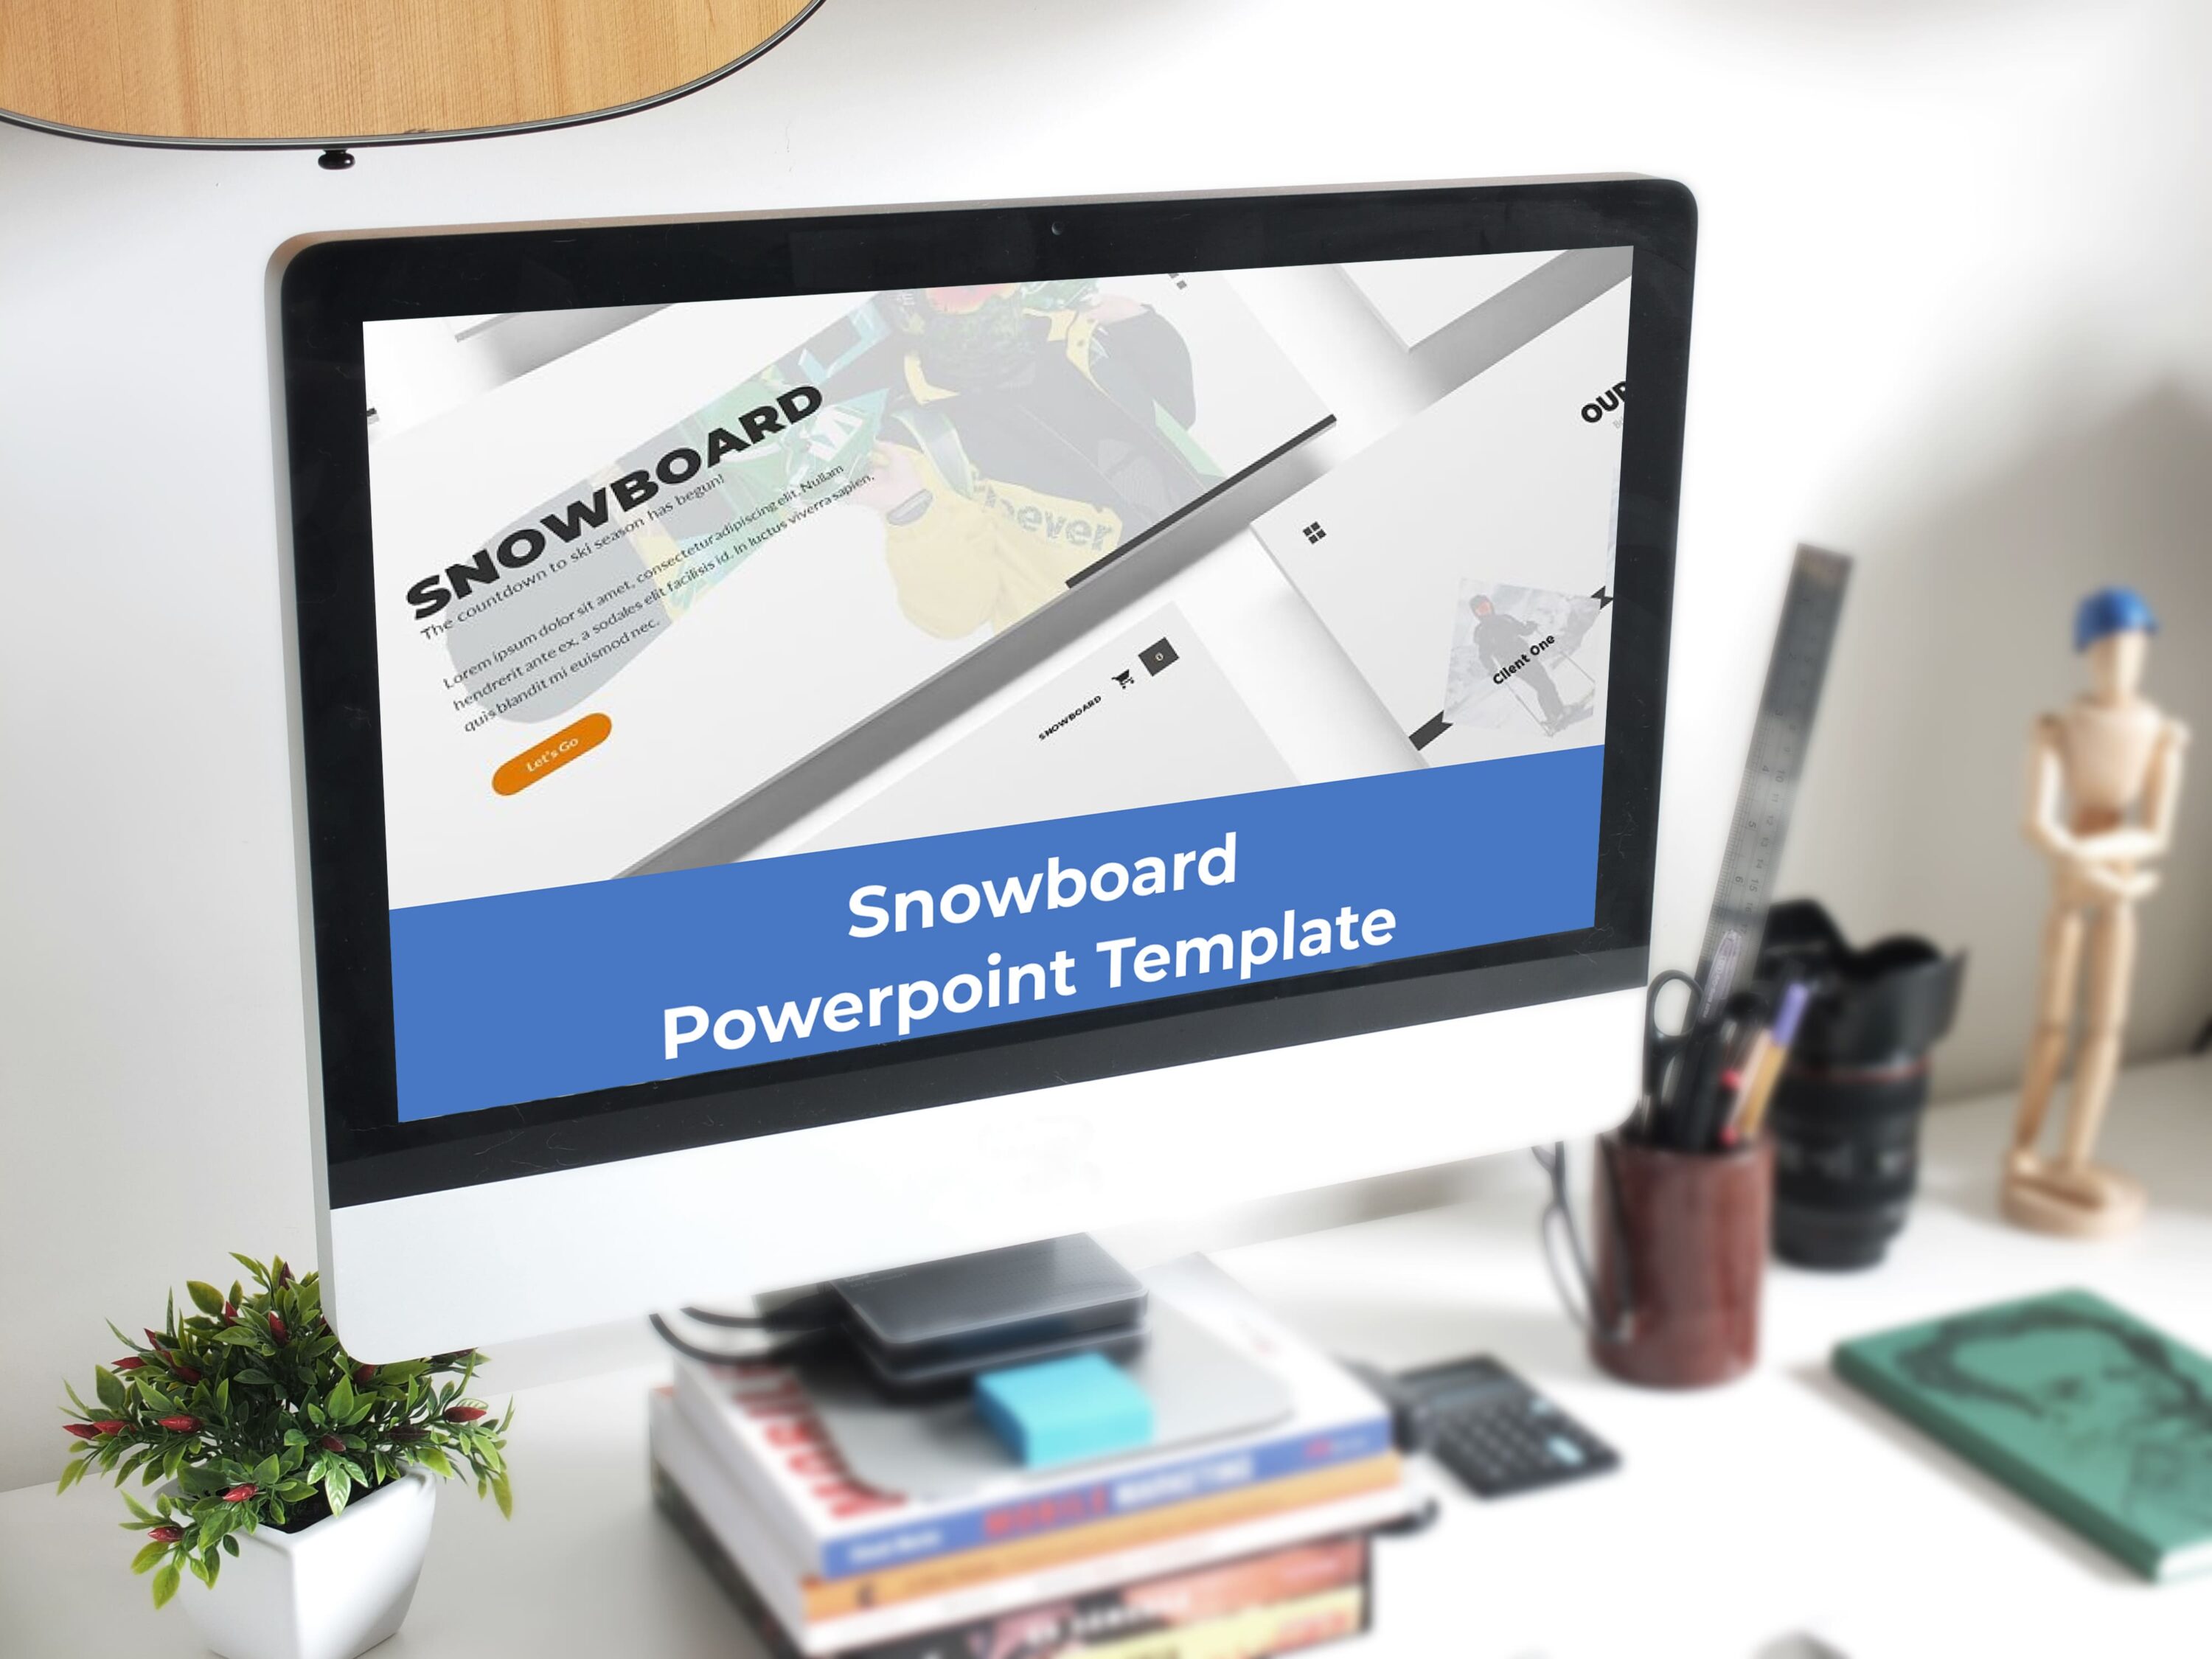 Snowboard Powerpoint Template - Mockup on Desktop.